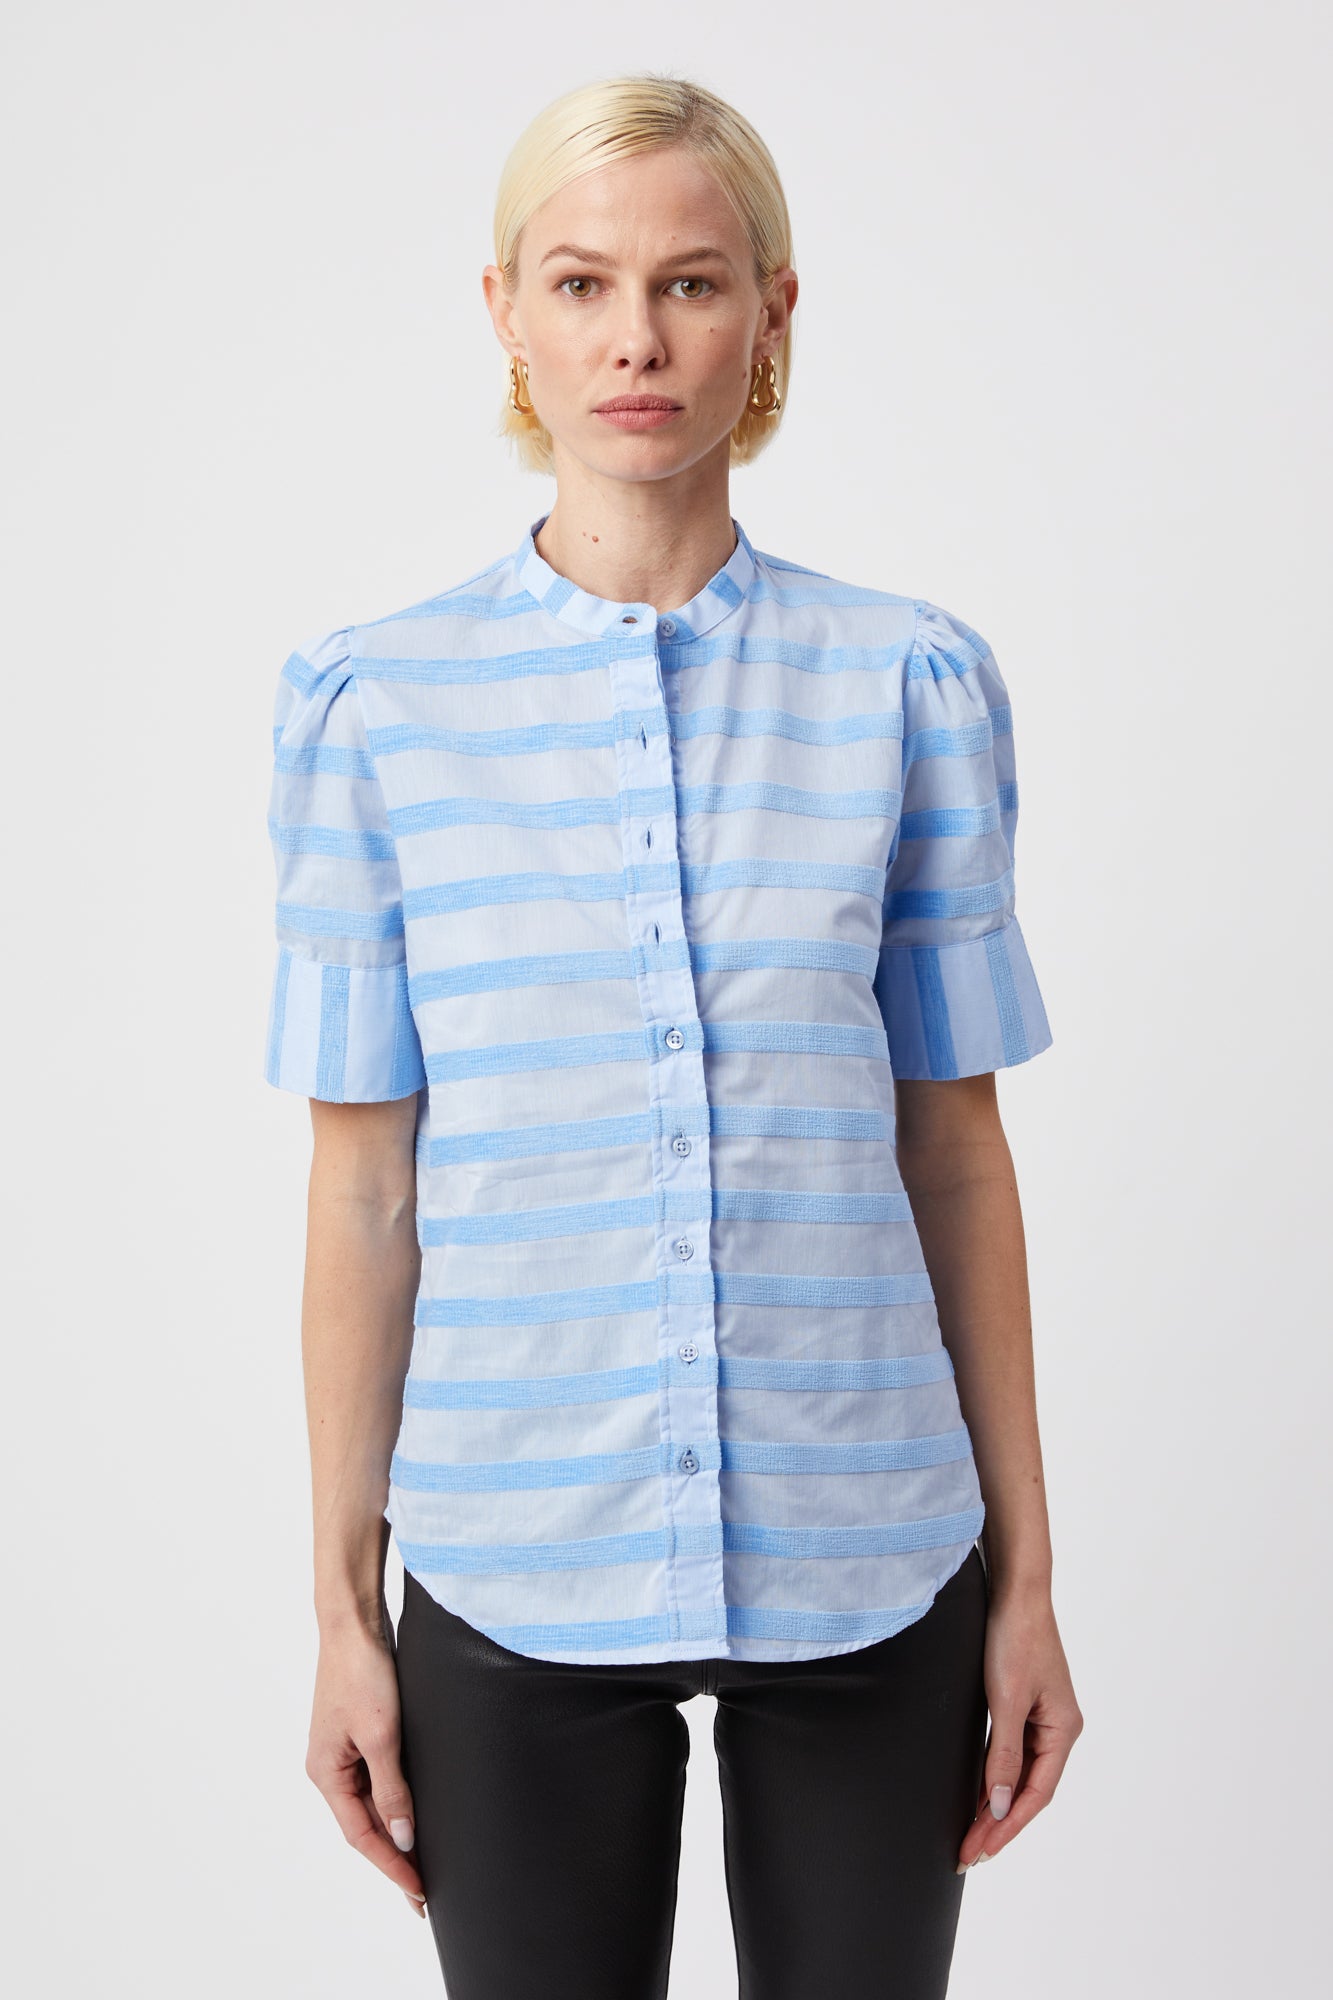 The Puff Shoulder Short Sleeve Shirt – The Shirt